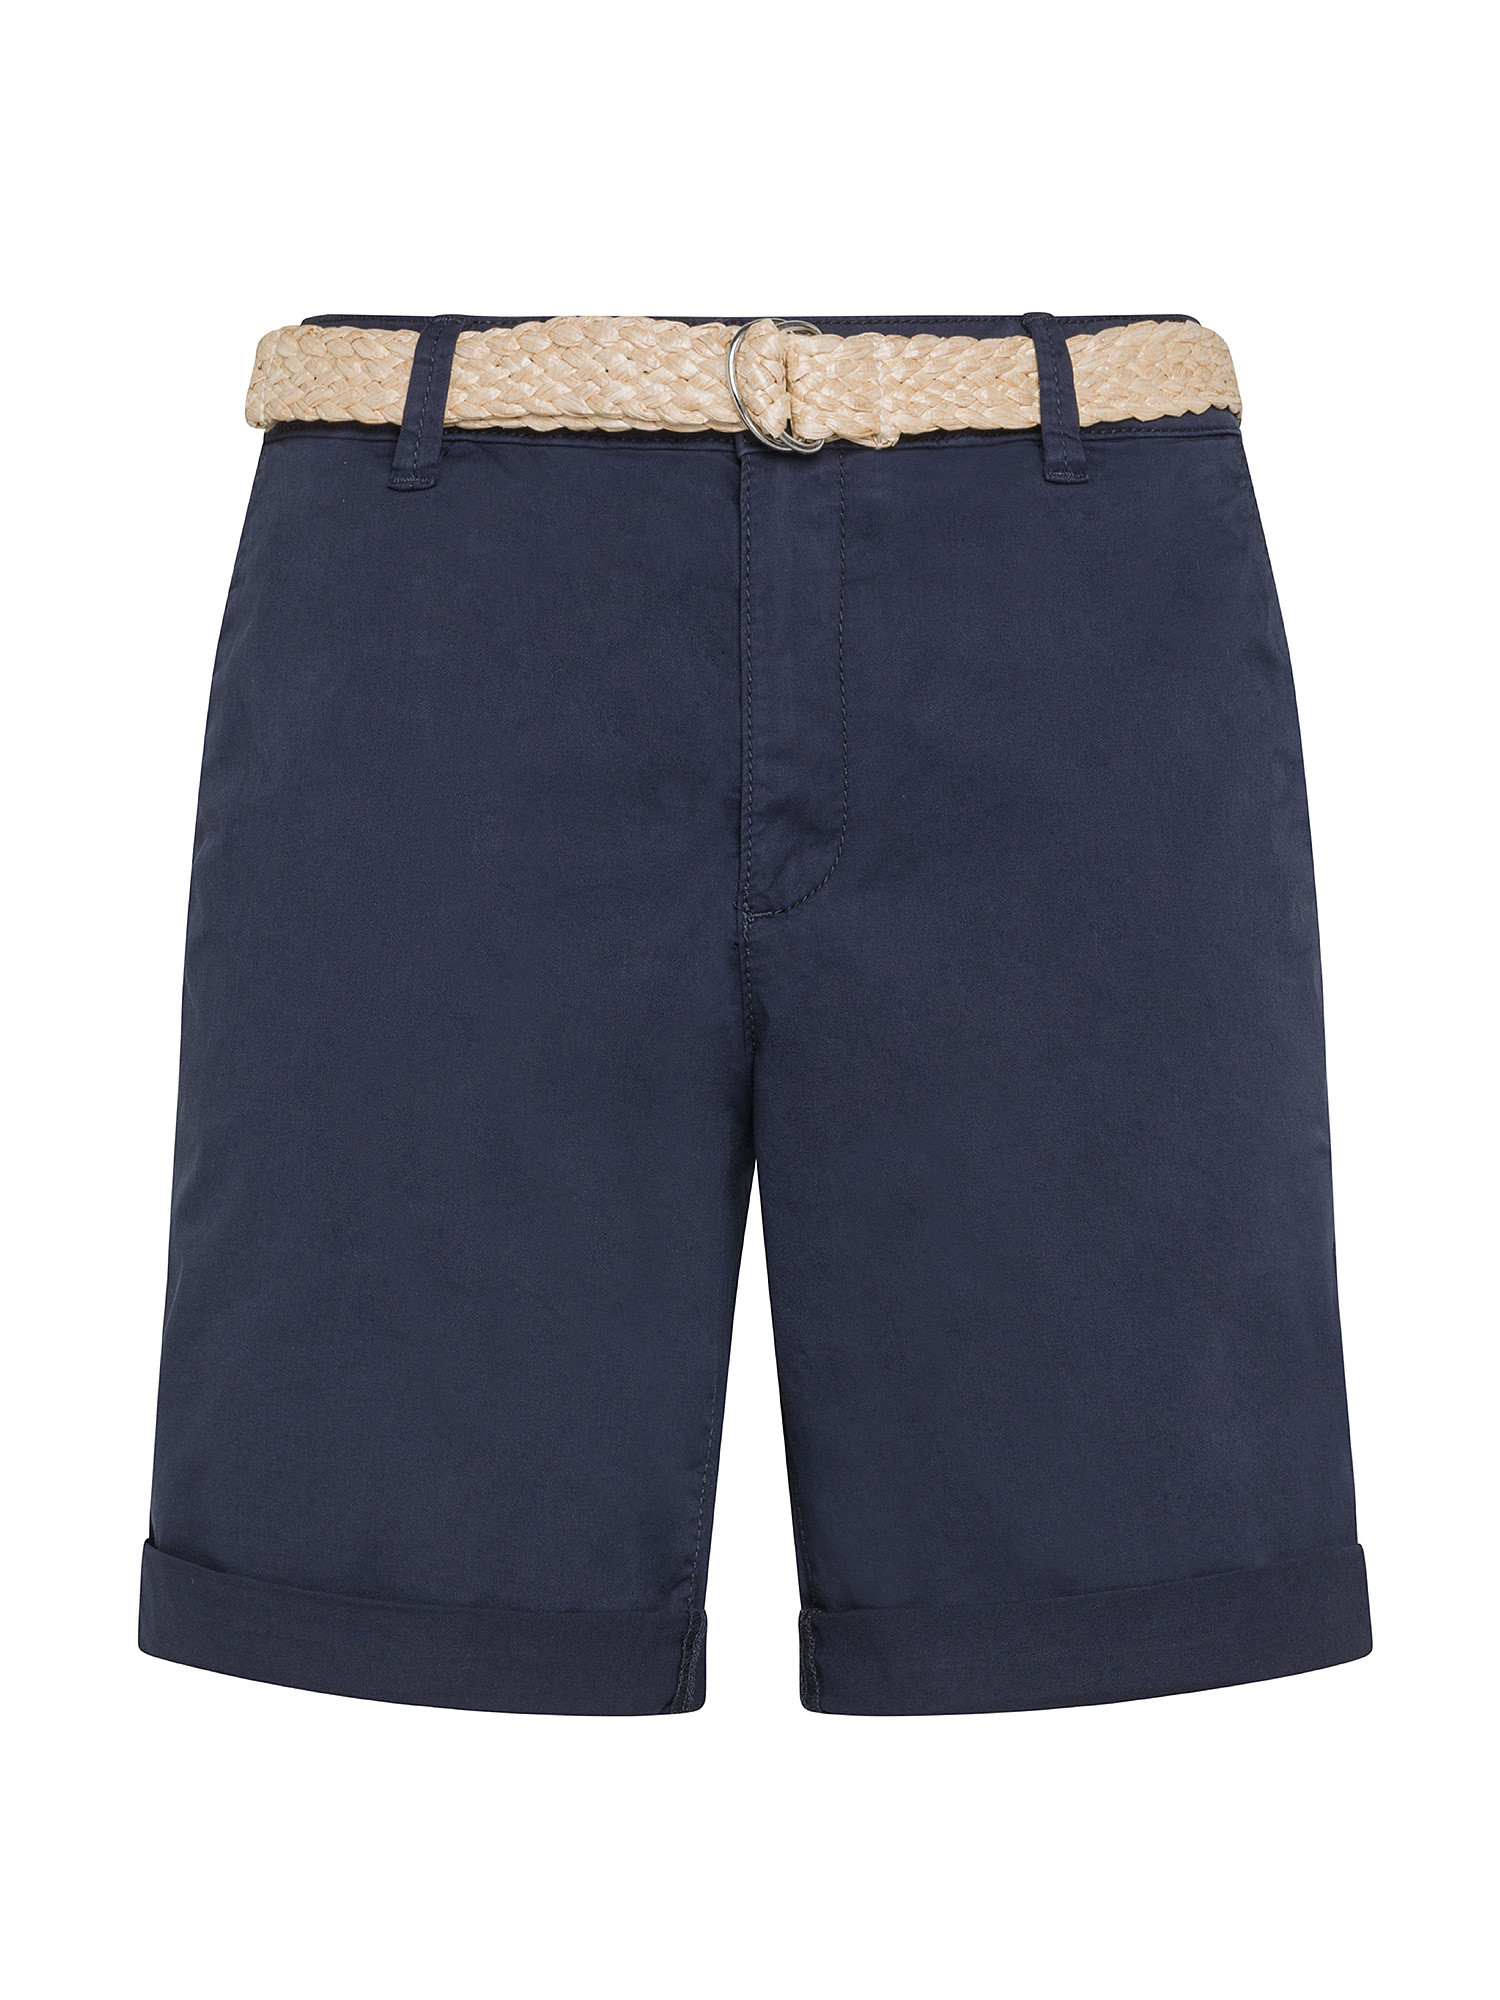 Esprit - Shorts with braided raffia belt, Dark Blue, large image number 0